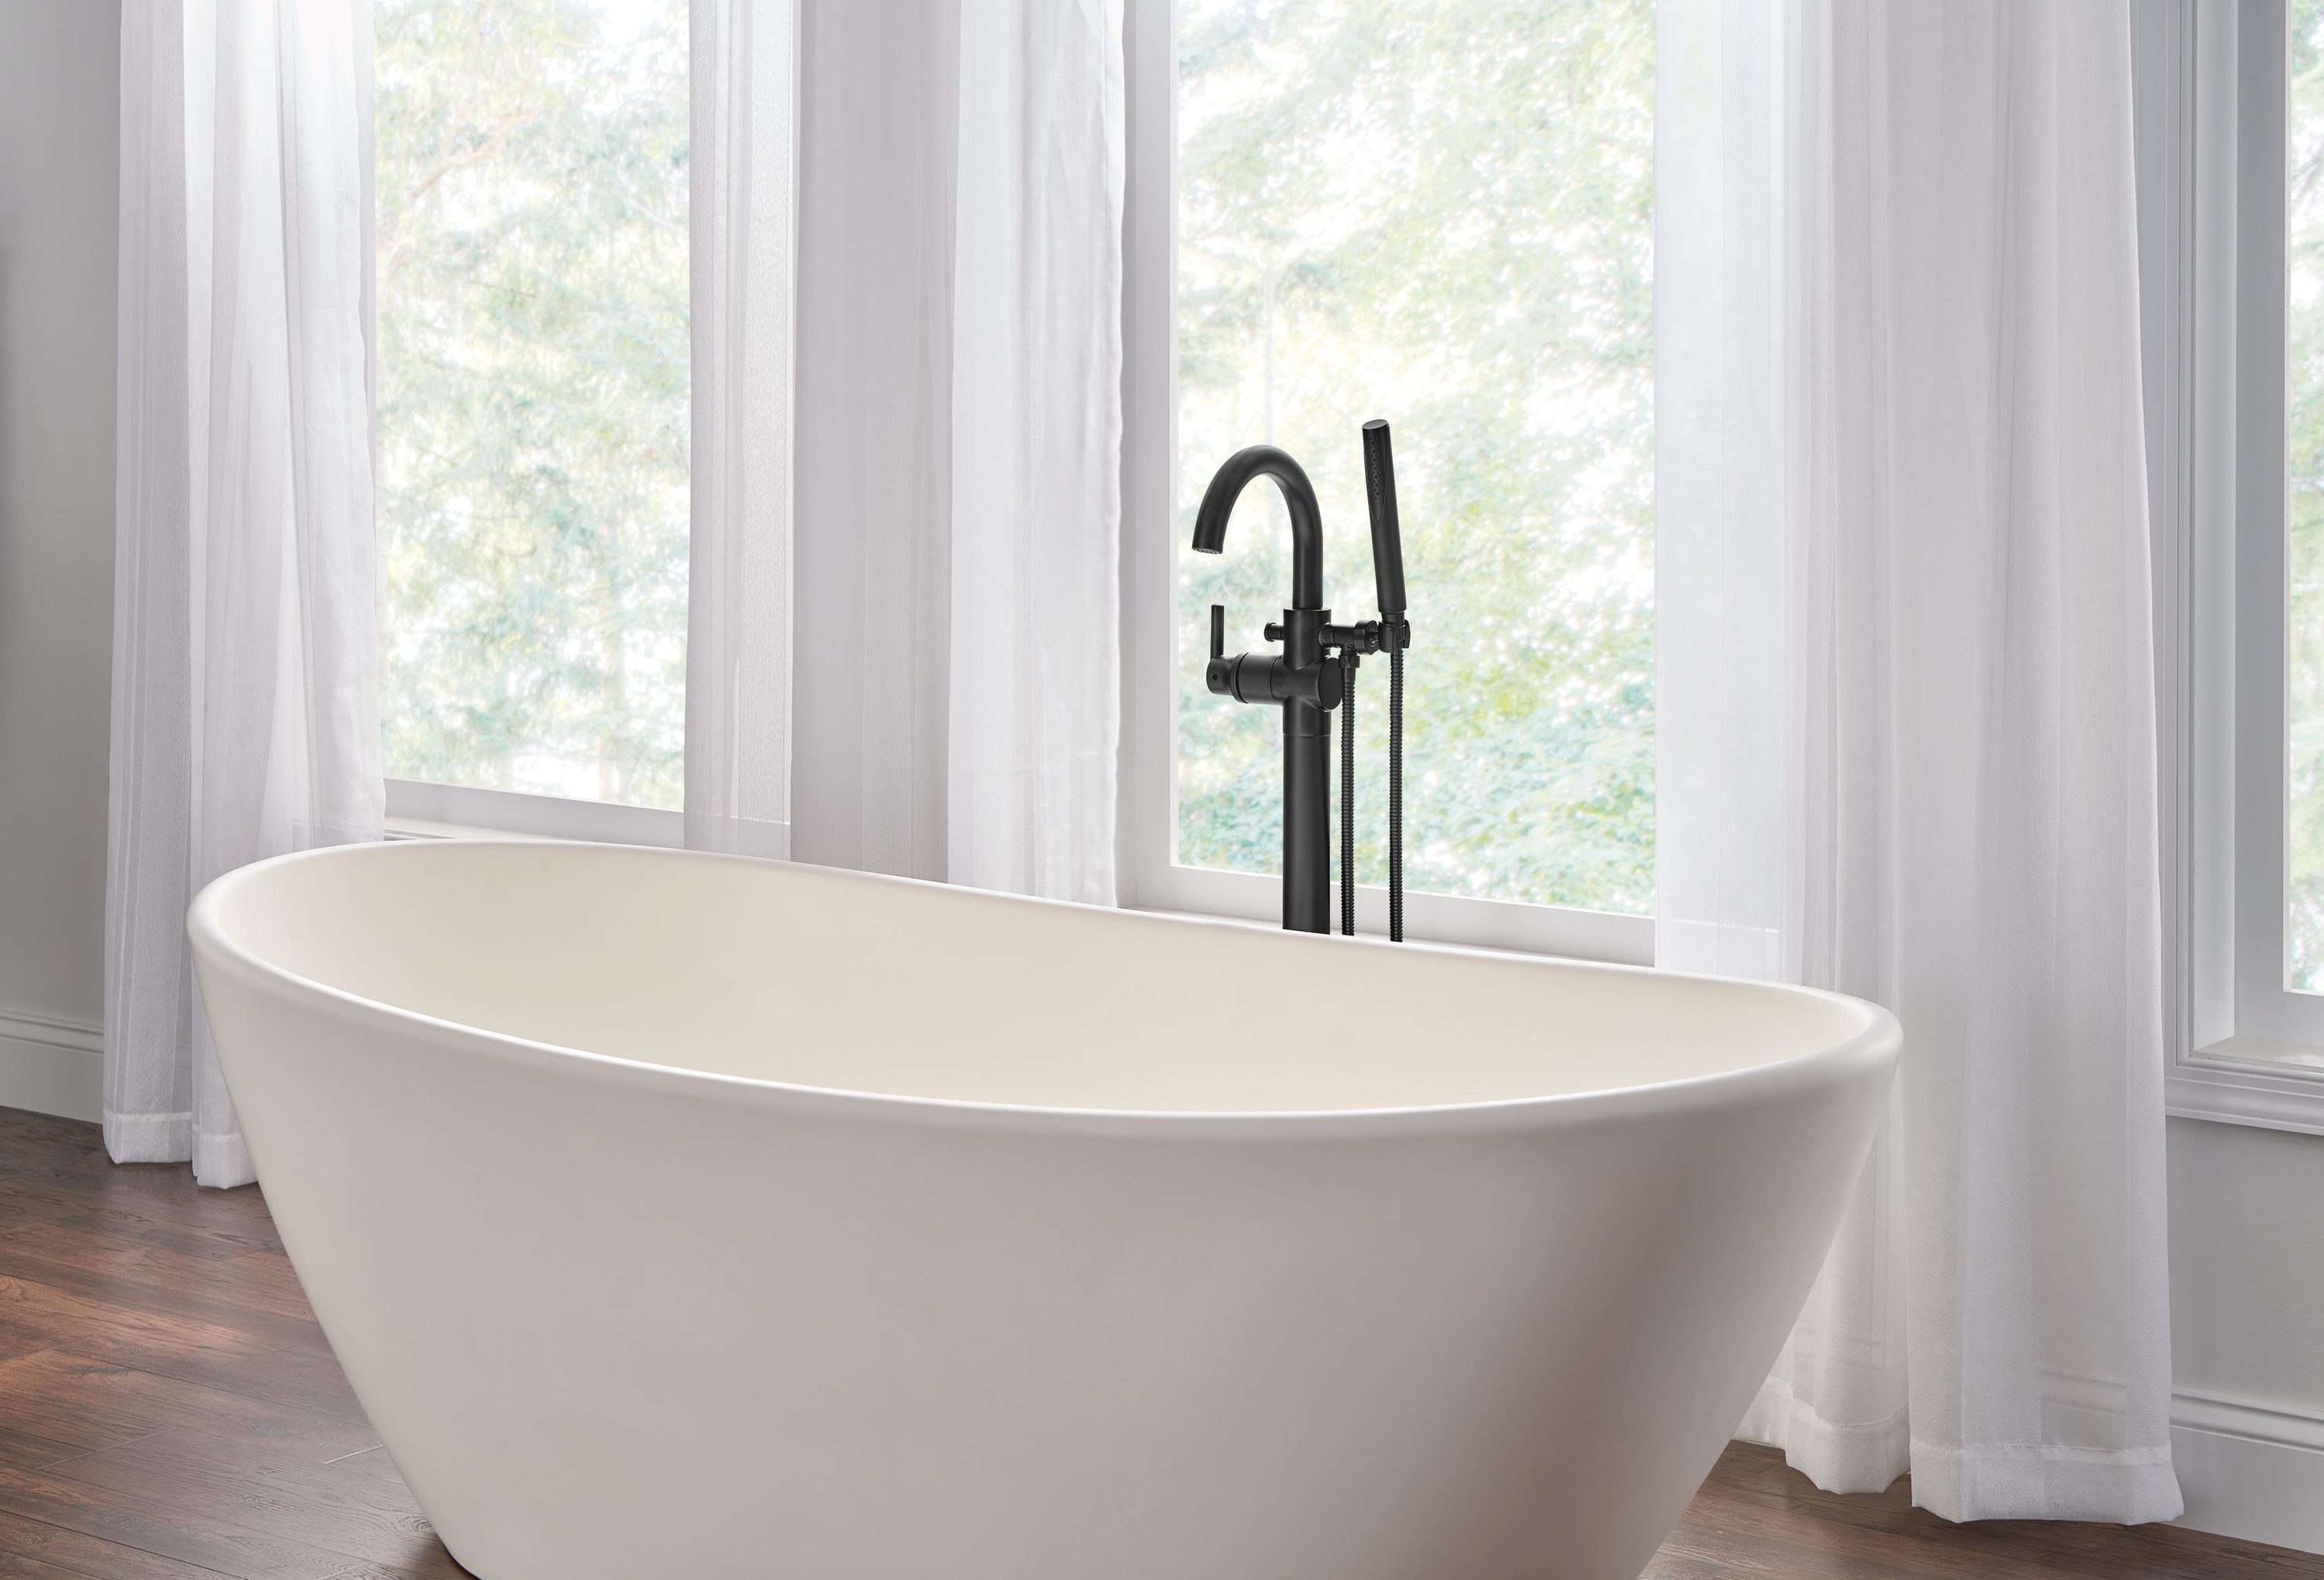 Residential Freestanding Bathtub Faucet, Delta Trinsic Roman Bathtub Faucet With Hand Shower Matte Black